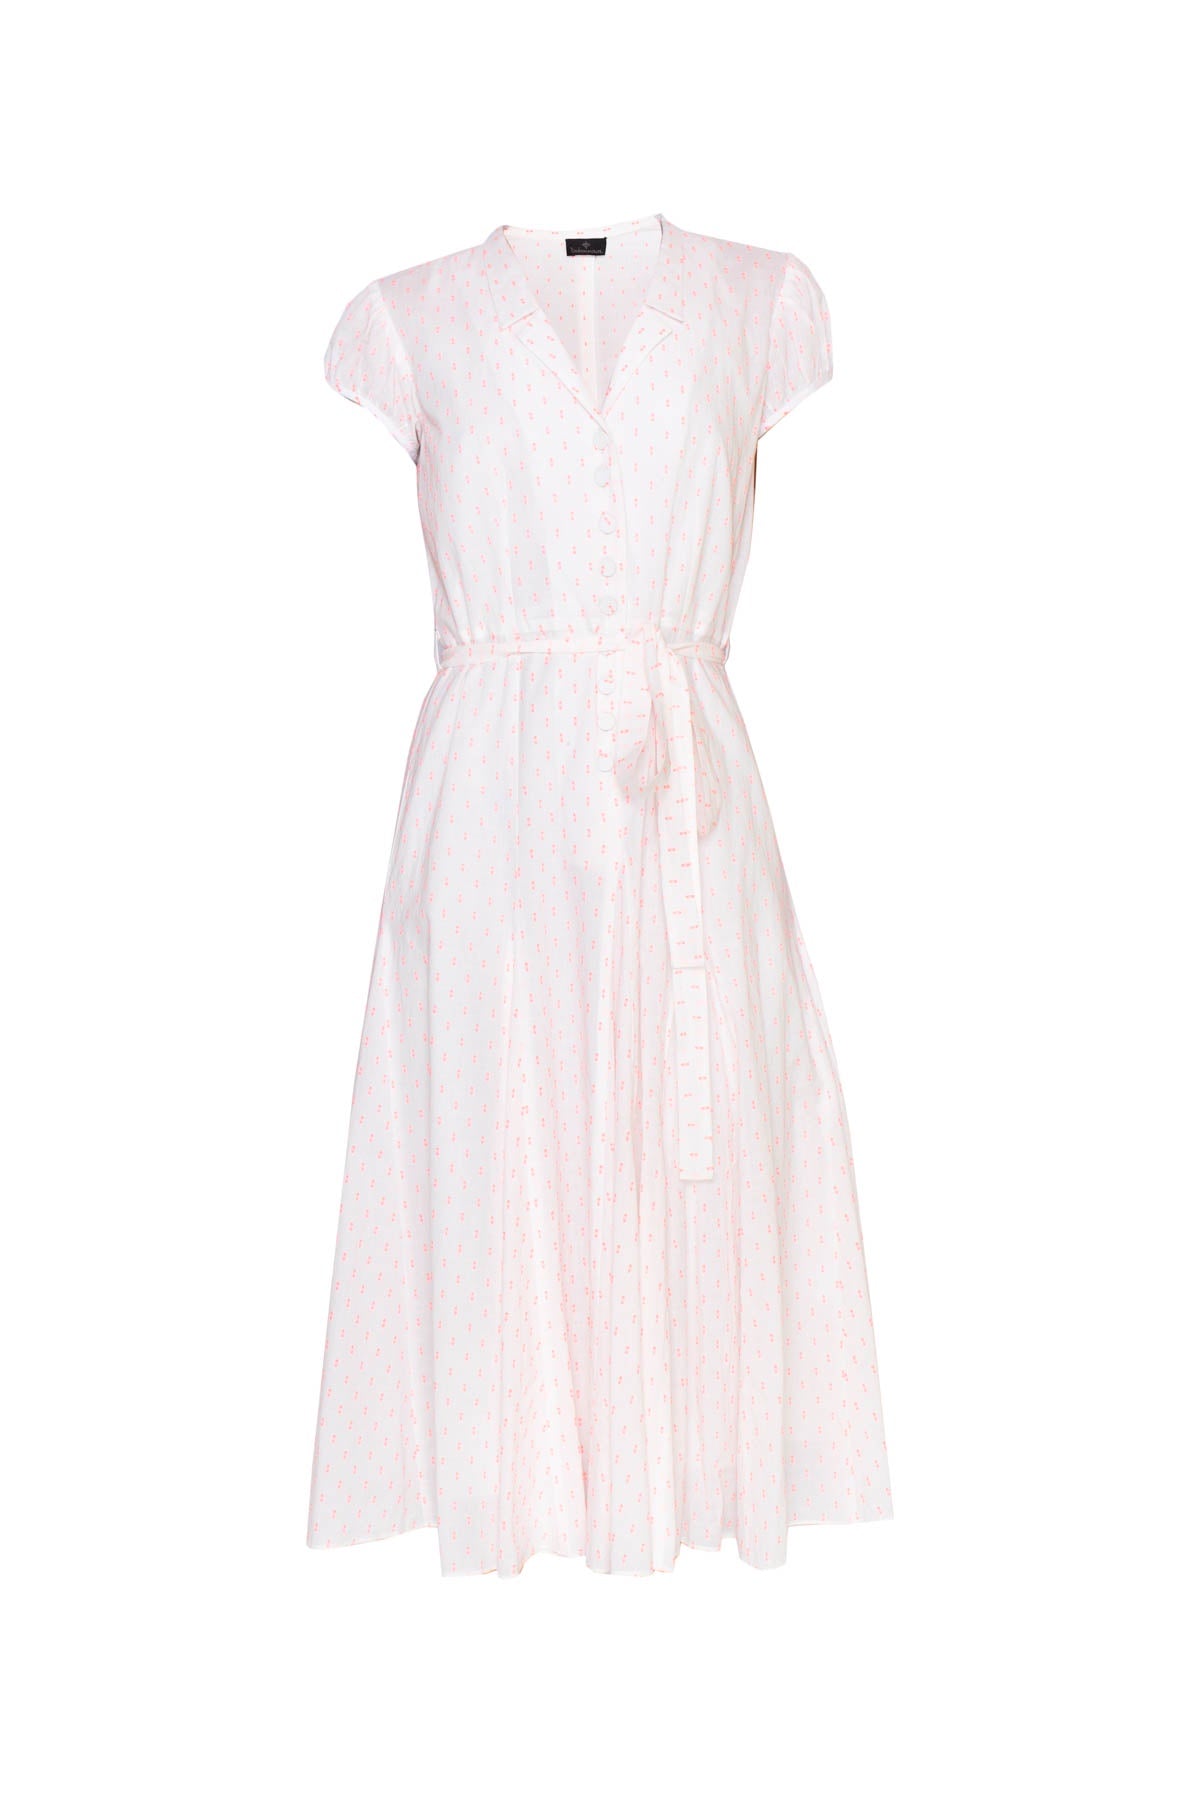 Cotton Bugesha Dress - Pink Polka